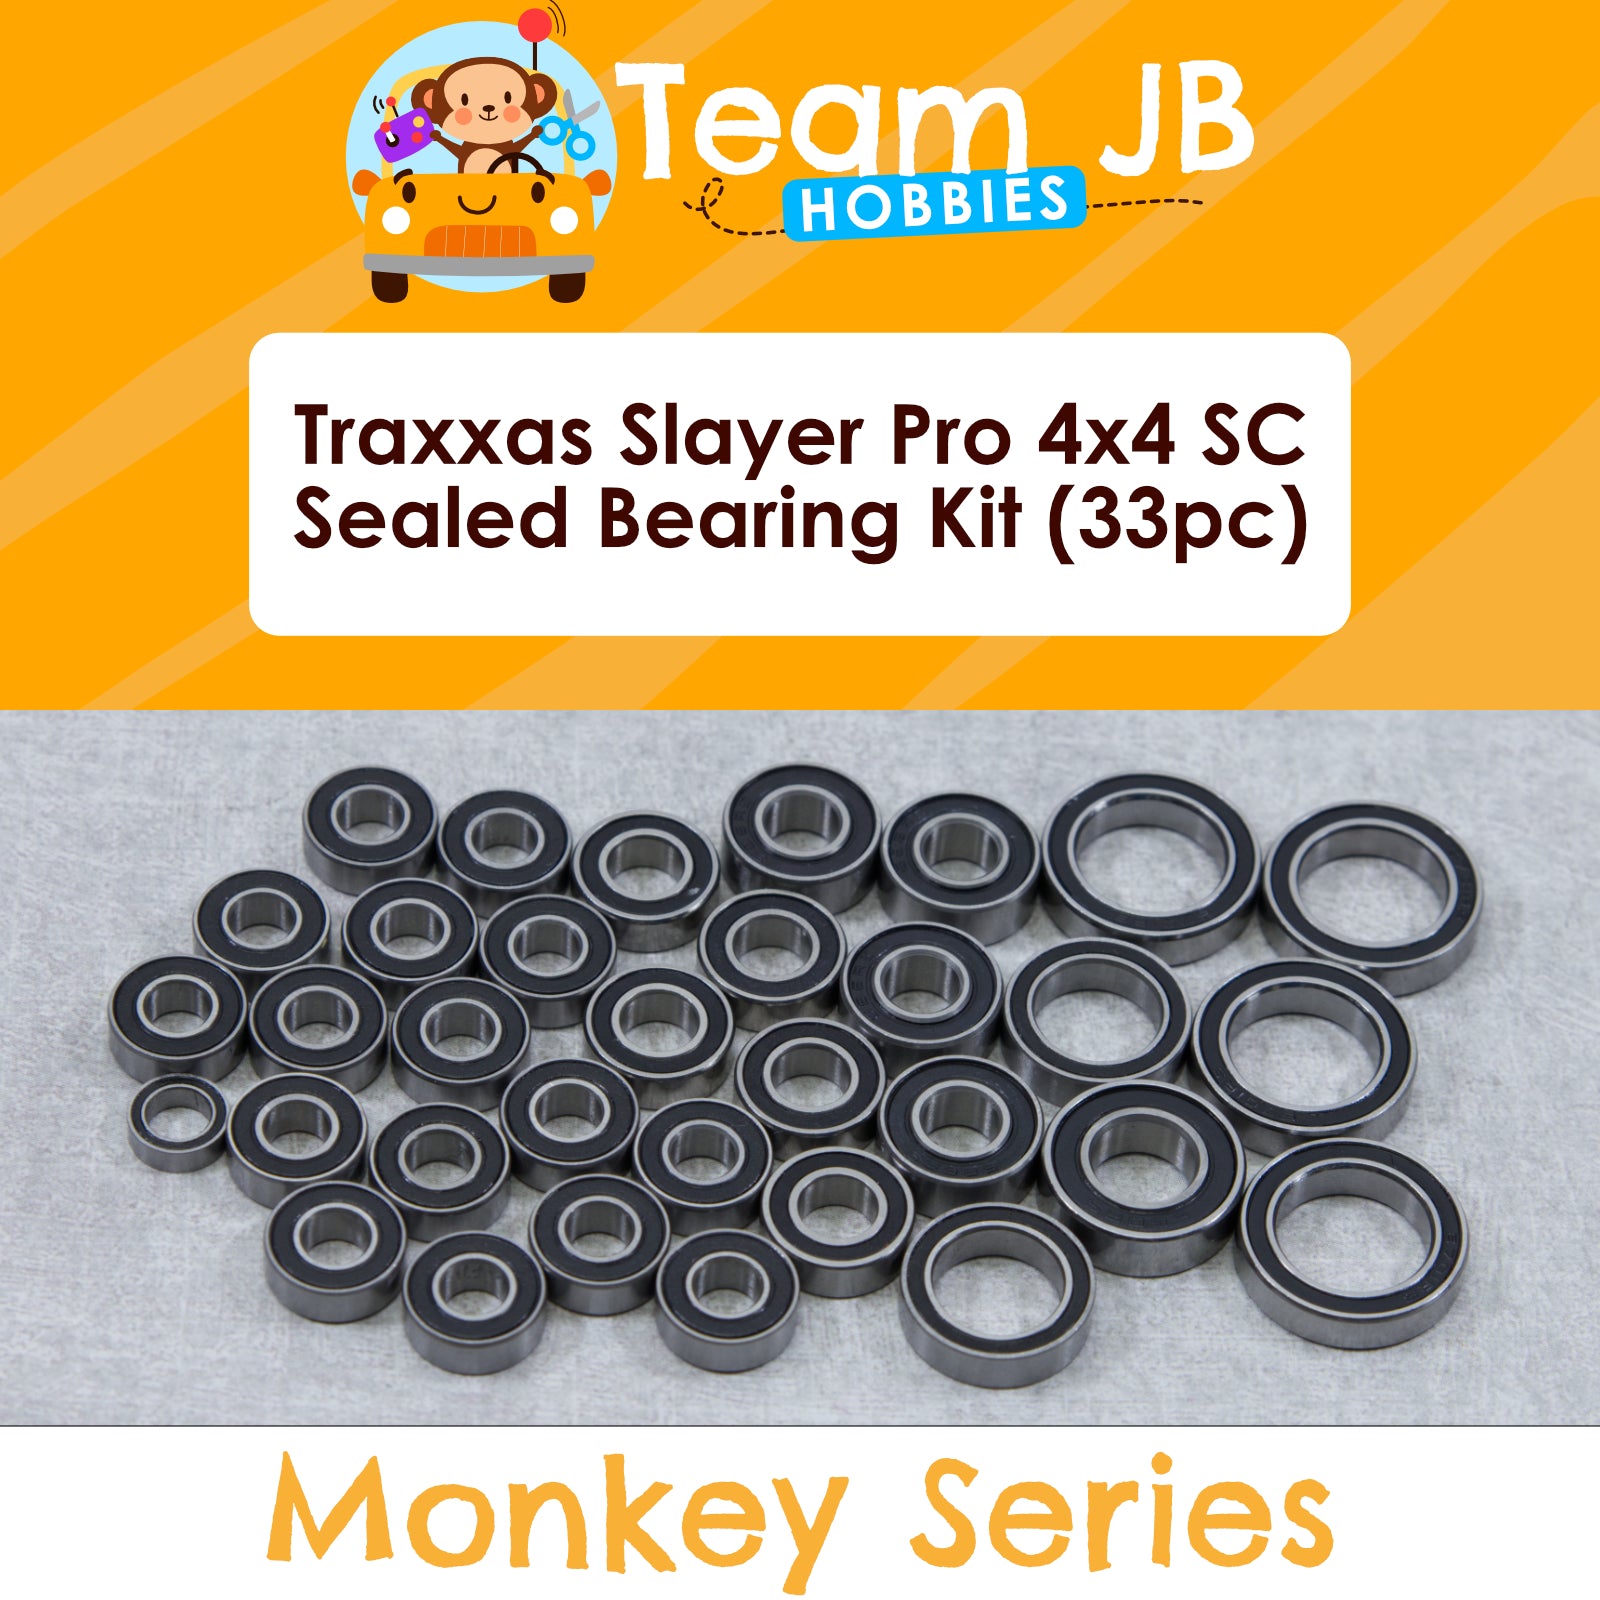 Traxxas Slayer Pro 4x4 SC - Sealed Bearing Kit